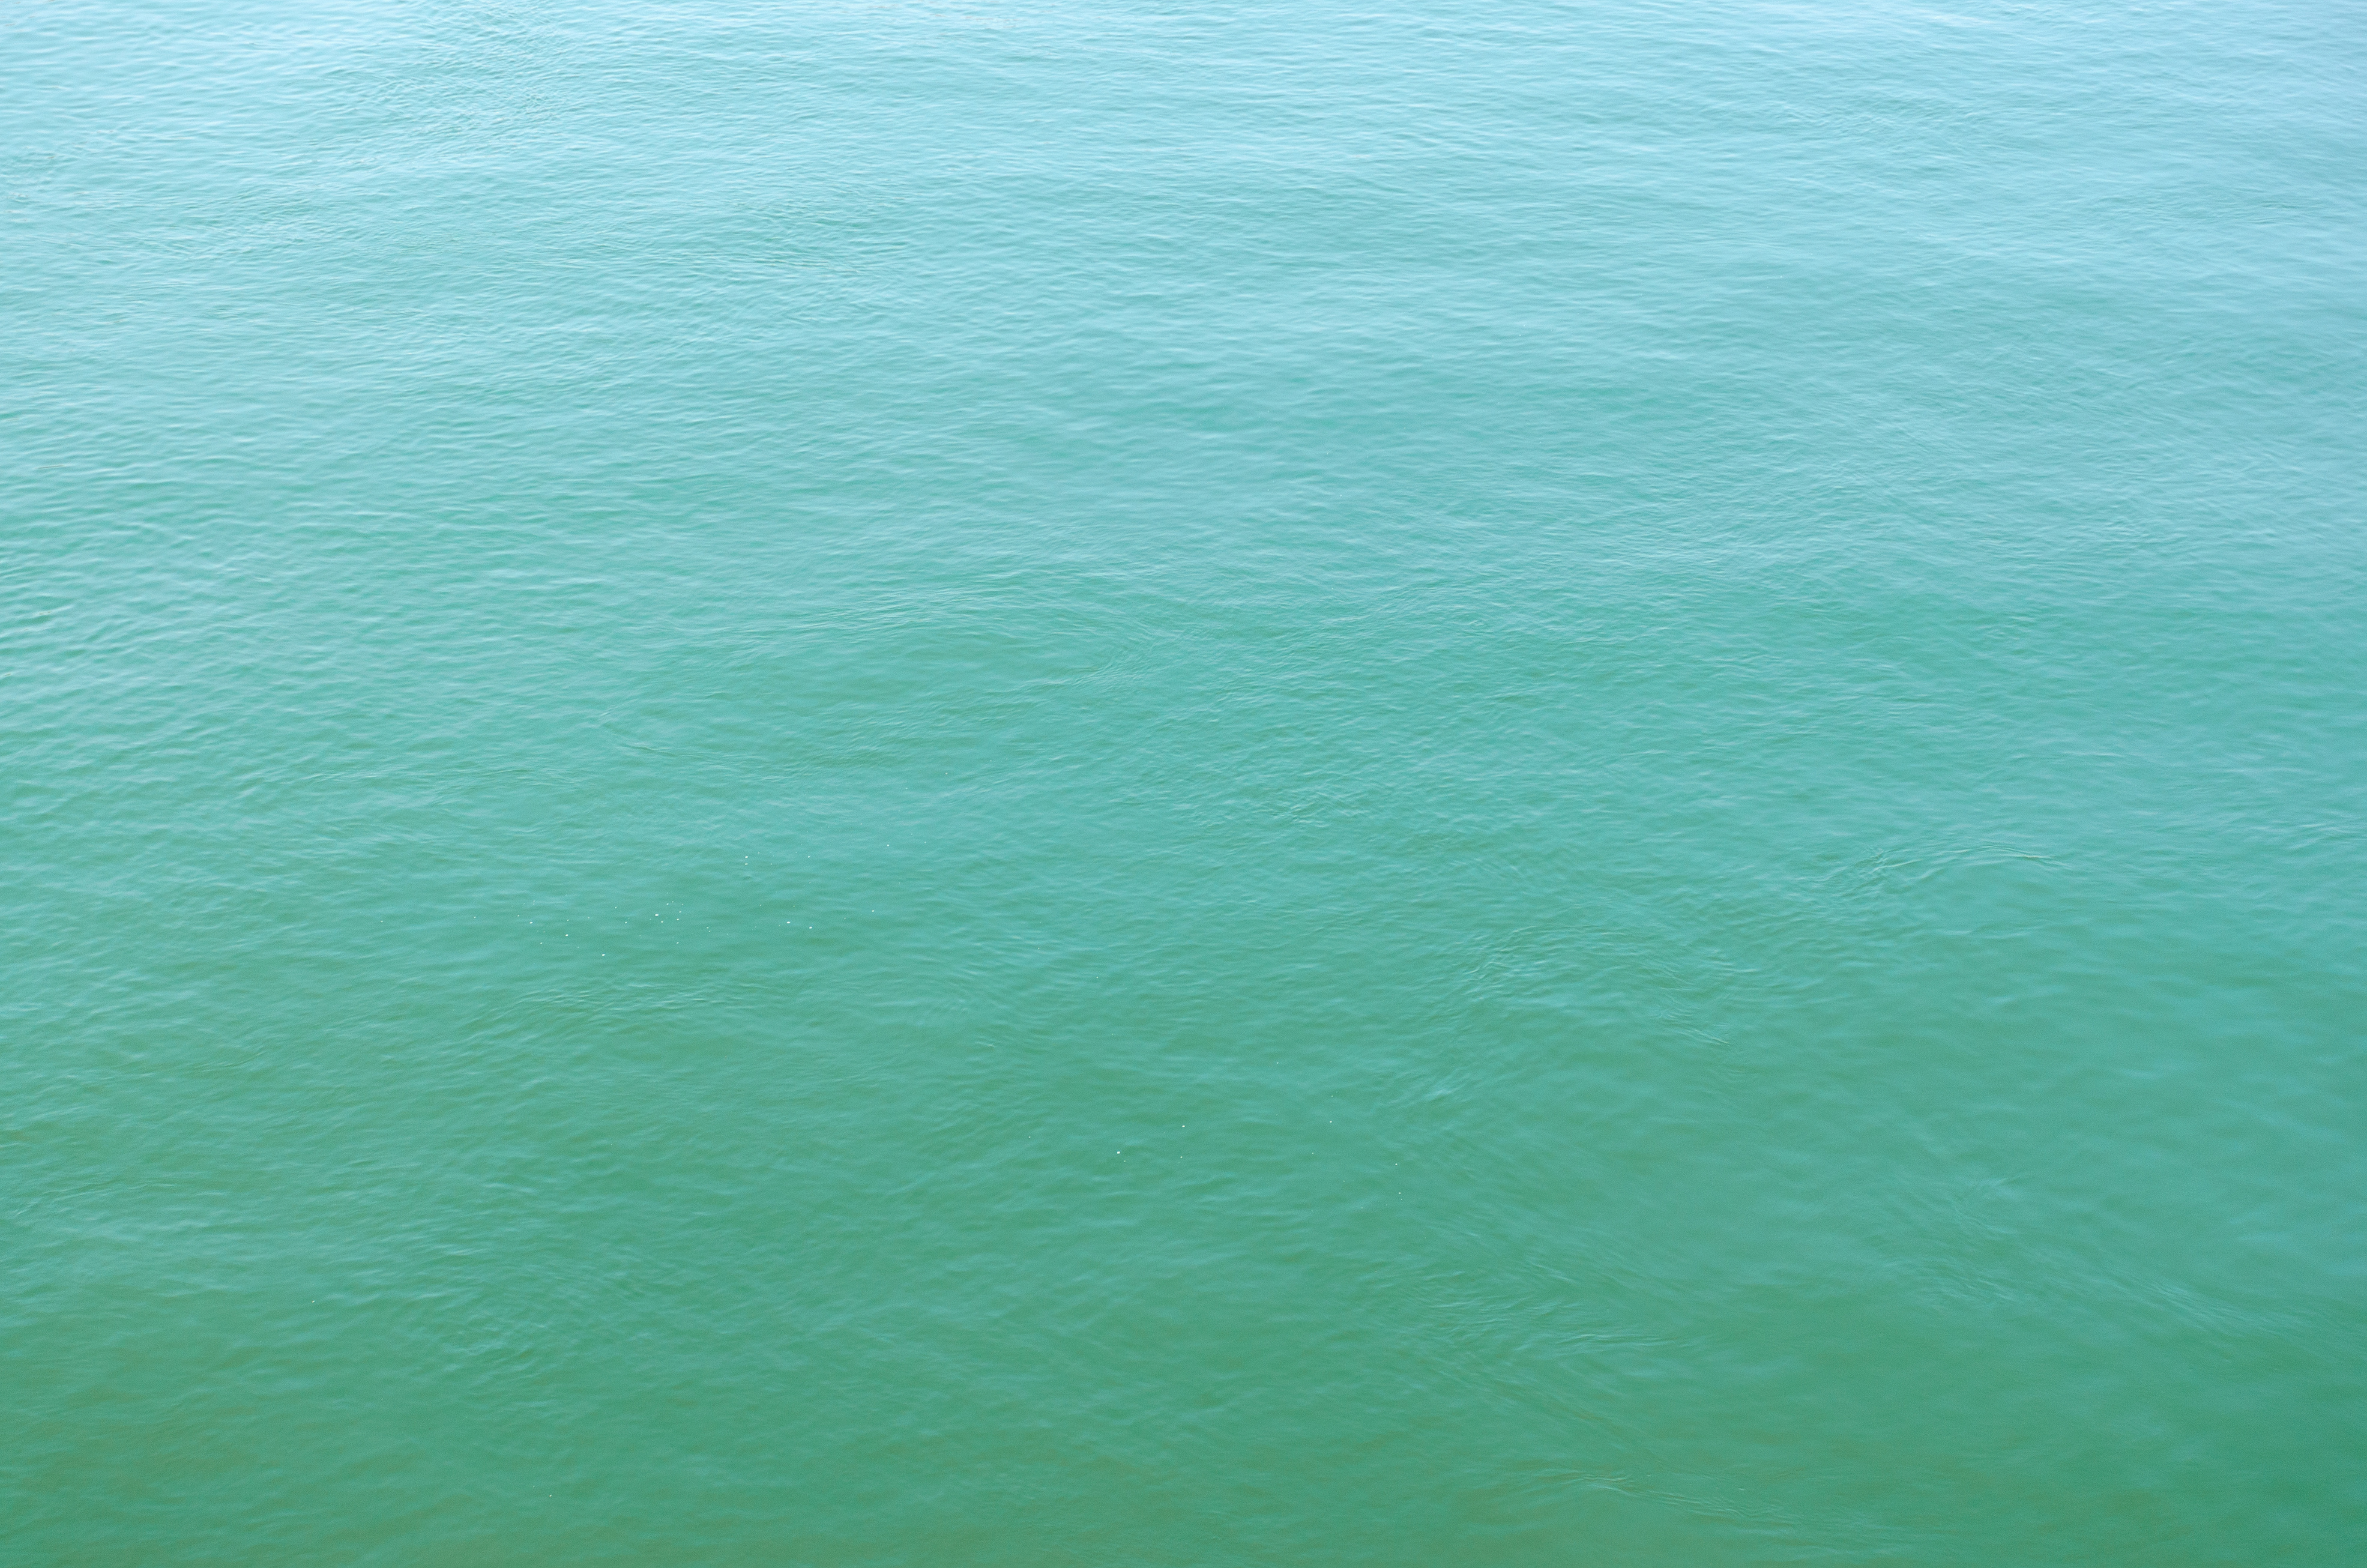 Calm green-blue water background texture